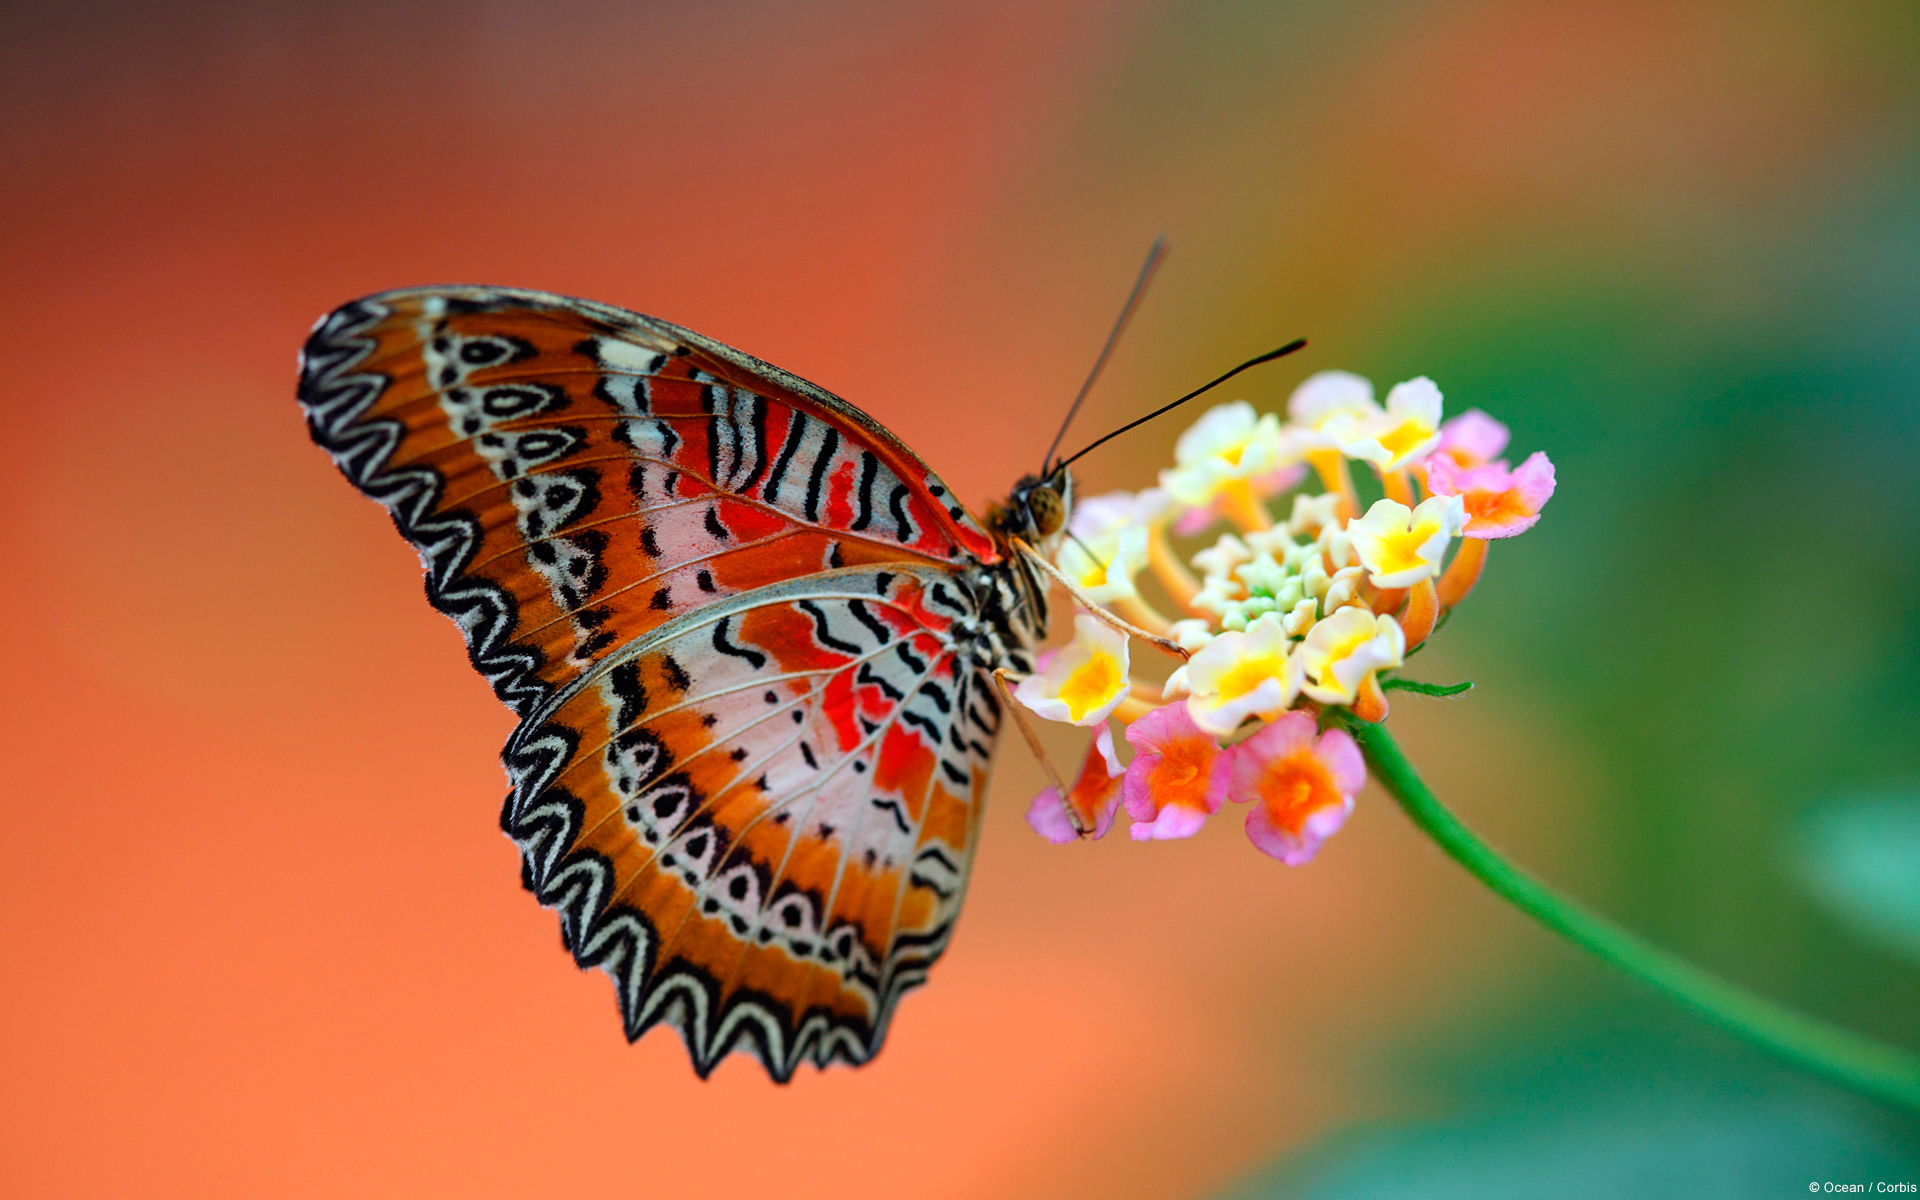 Butterfly on Flower Wallpapers | HD Wallpapers | ID #11608